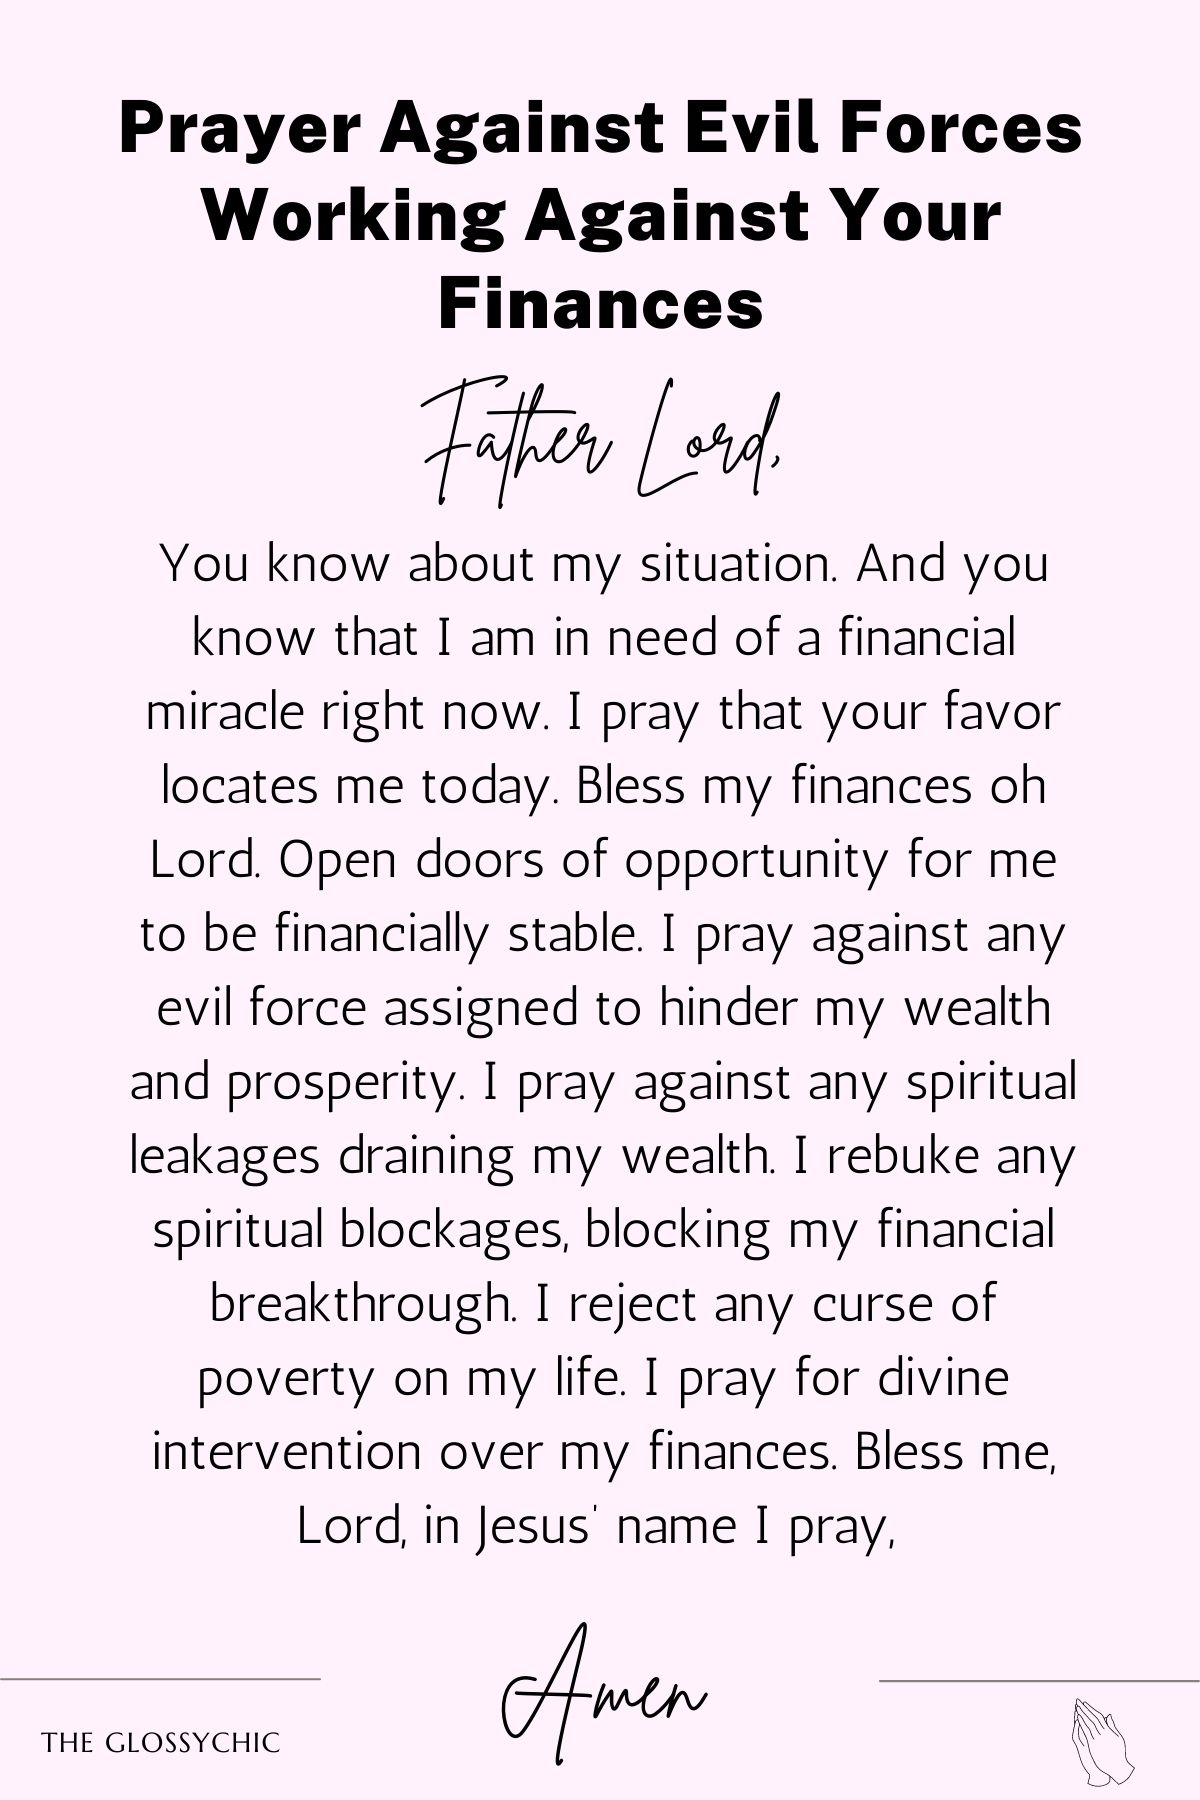 Prayer against evil forces working against your finances